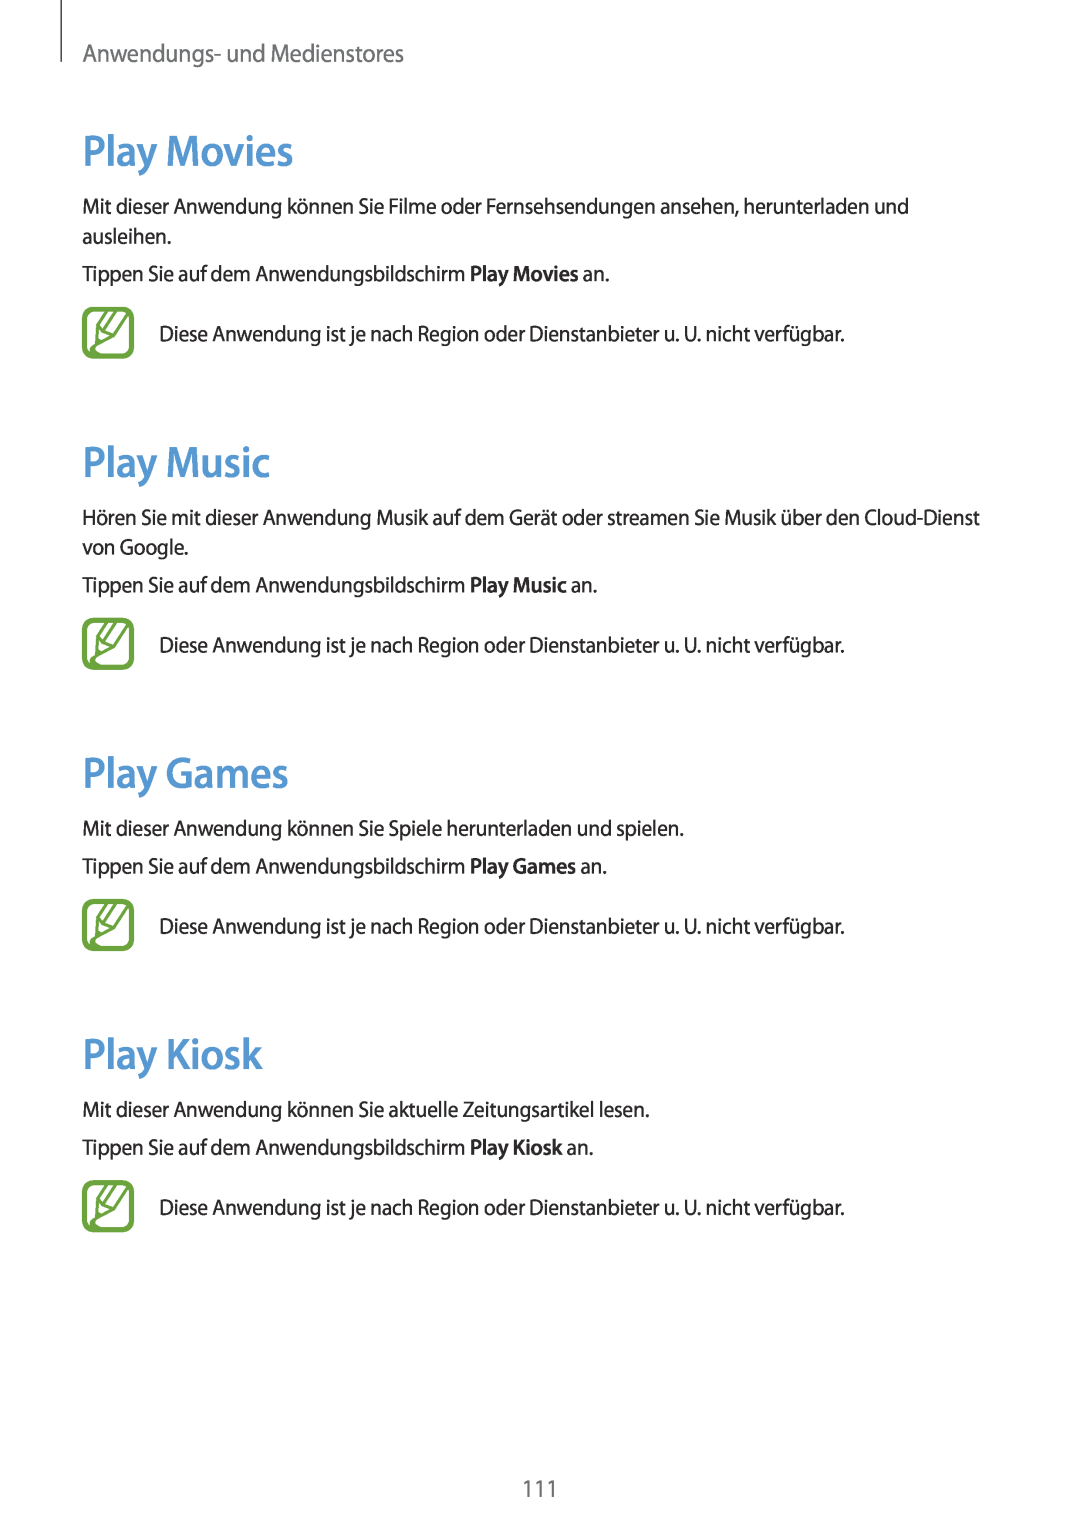 Samsung SM-P9000ZWATPH, SM-P9000ZWAATO manual Play Movies, Play Music, Play Games, Play Kiosk, Anwendungs- und Medienstores 